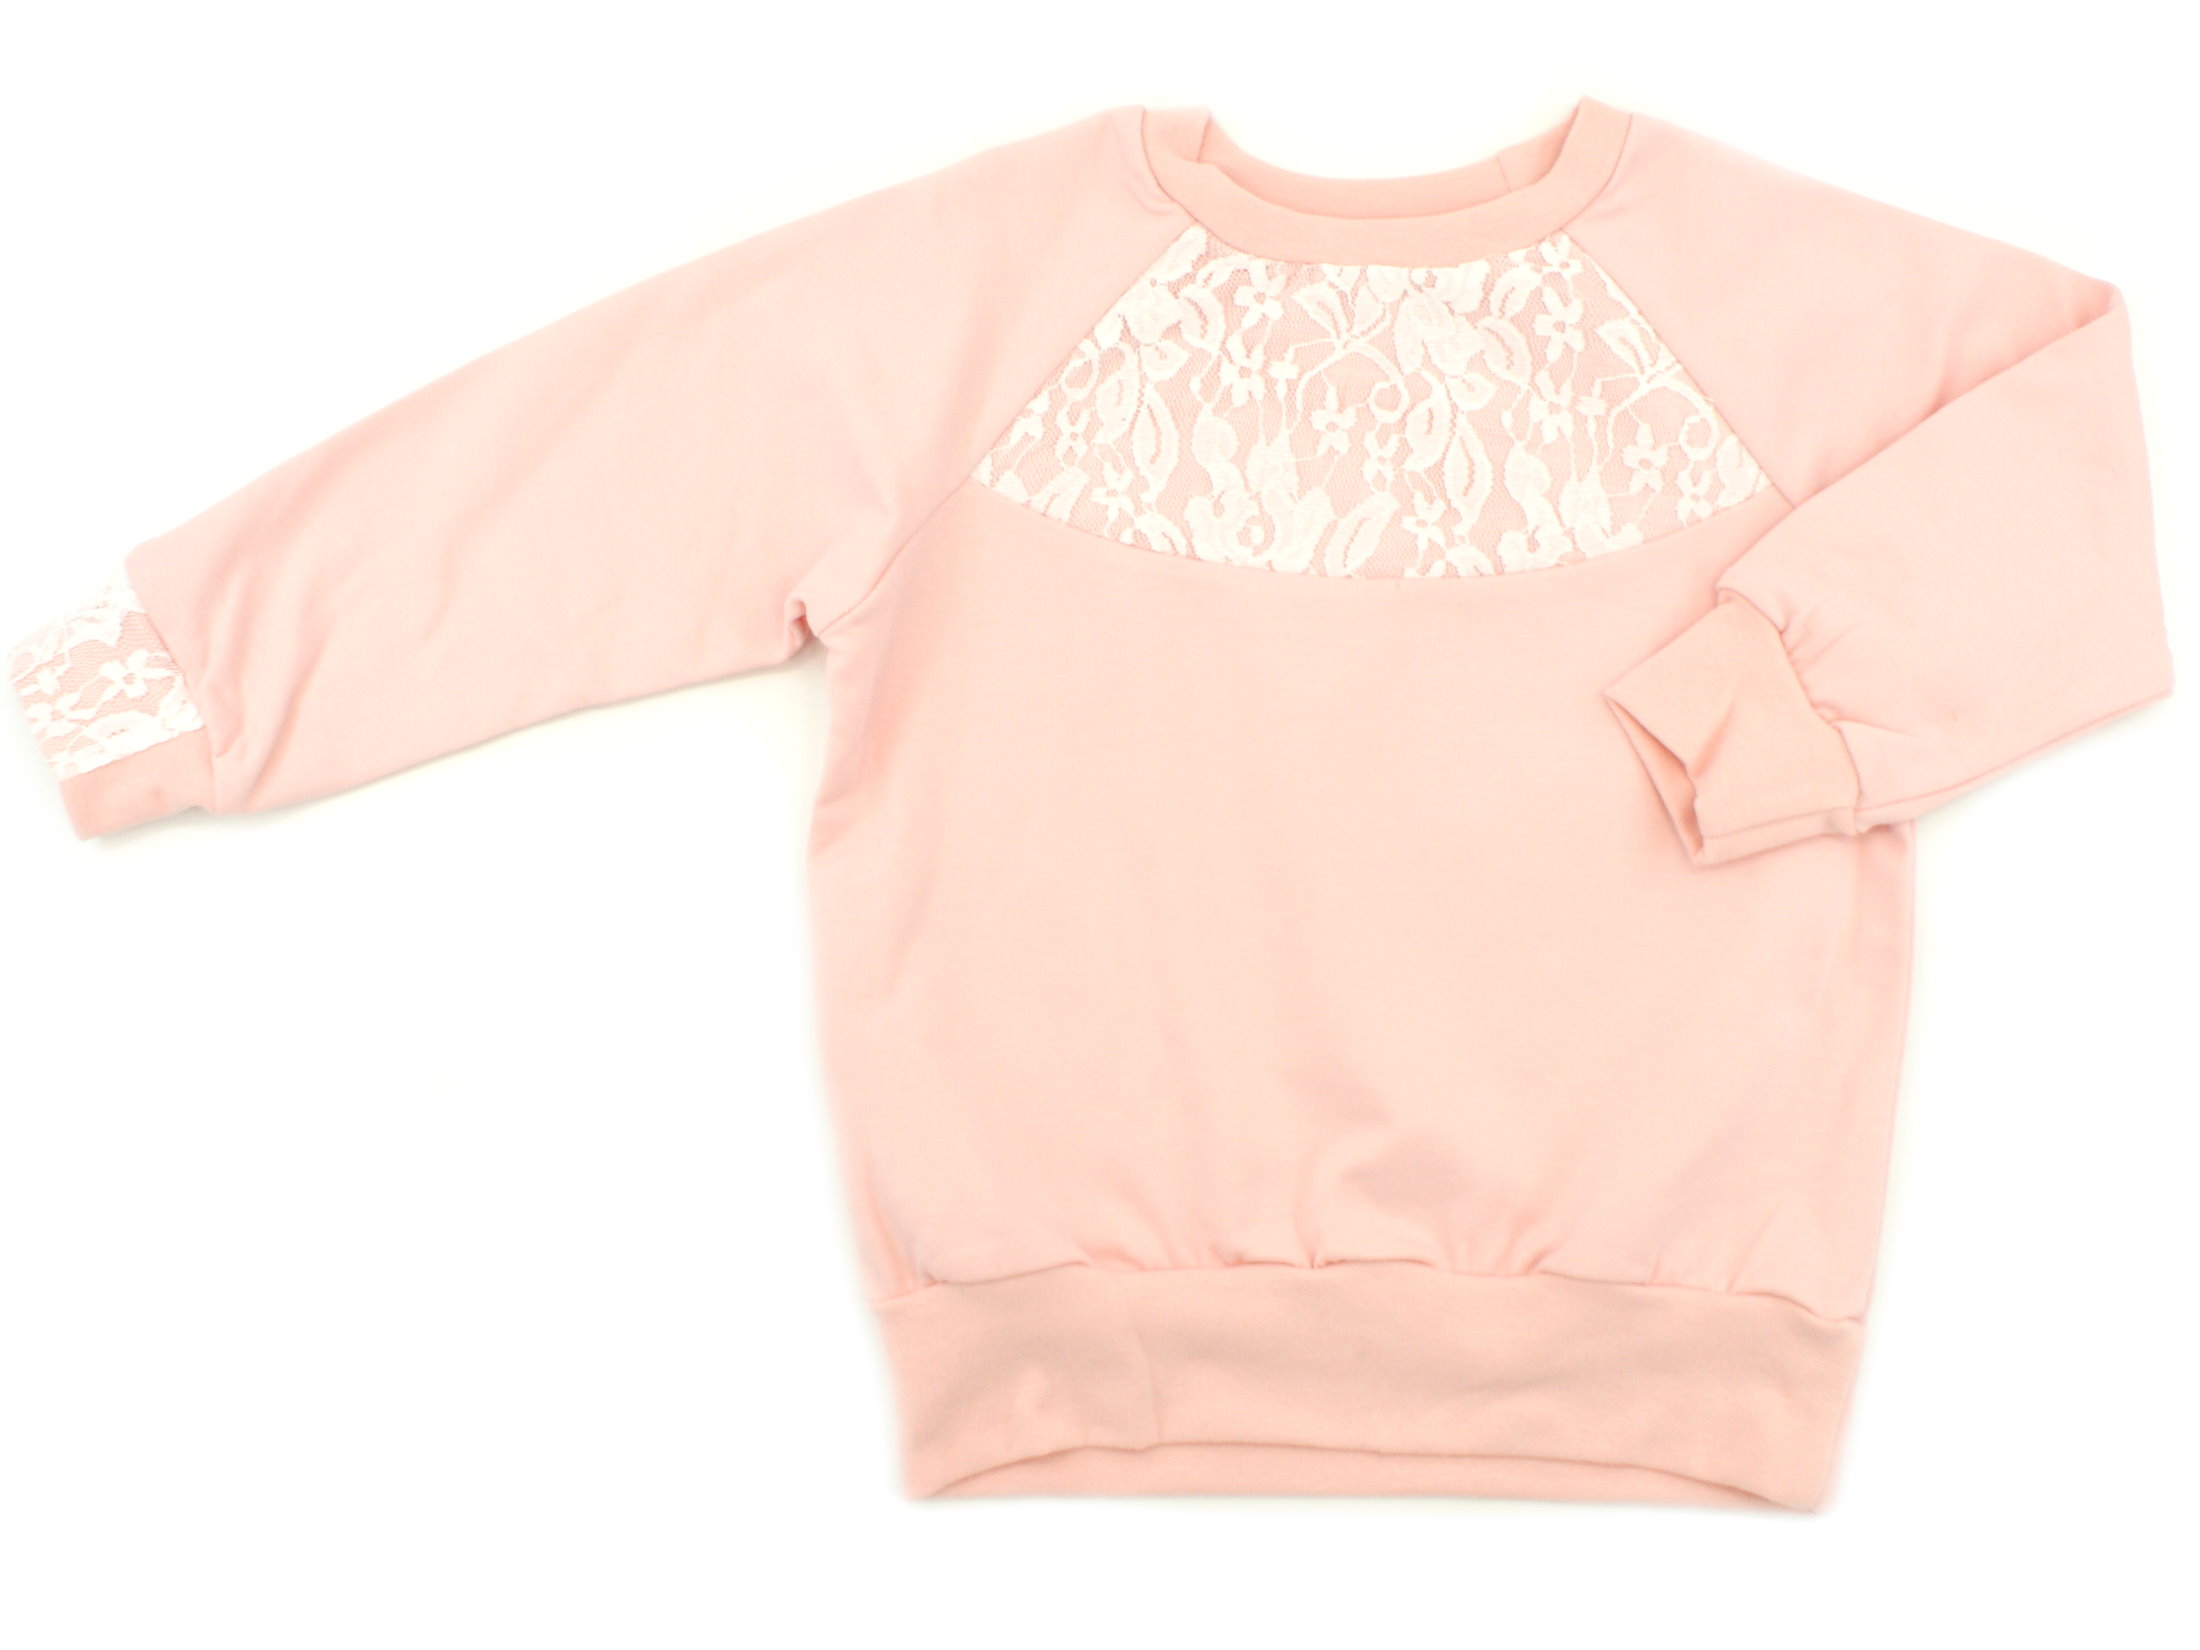 Kinder Sweatshirt Pullover "Lace" altrosa mit Spitze